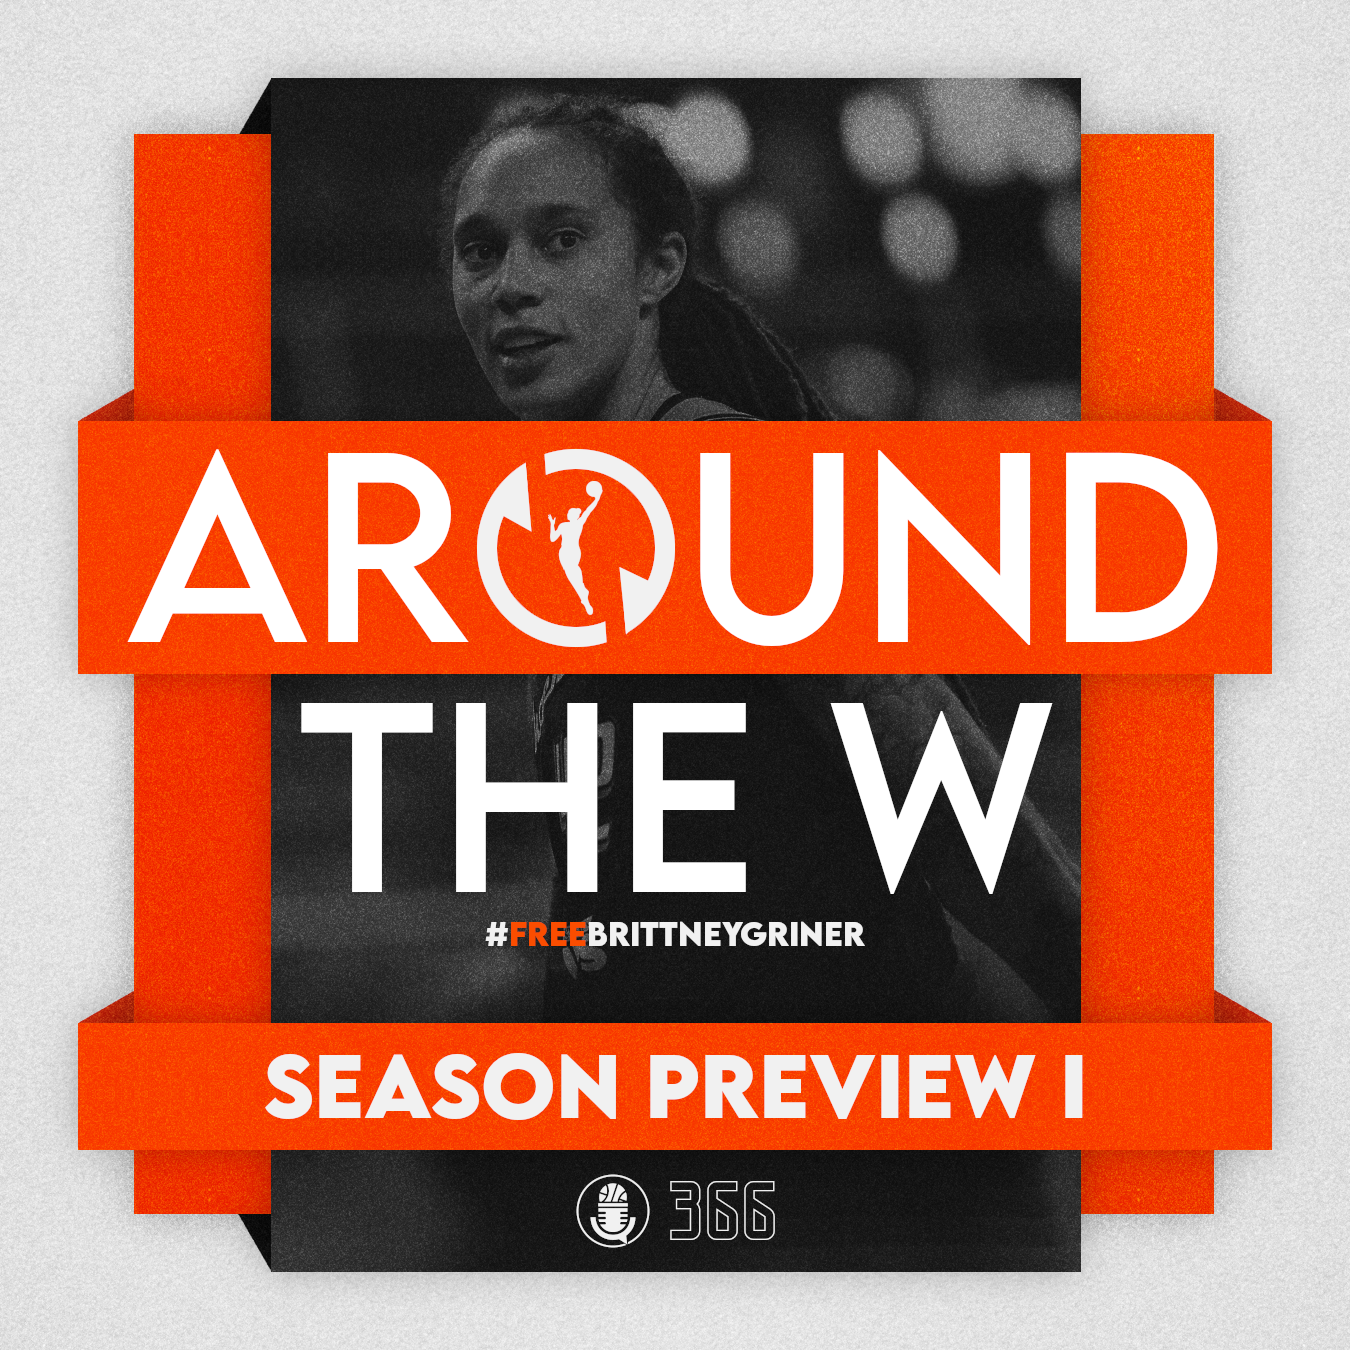 Around The W: Season Preview I